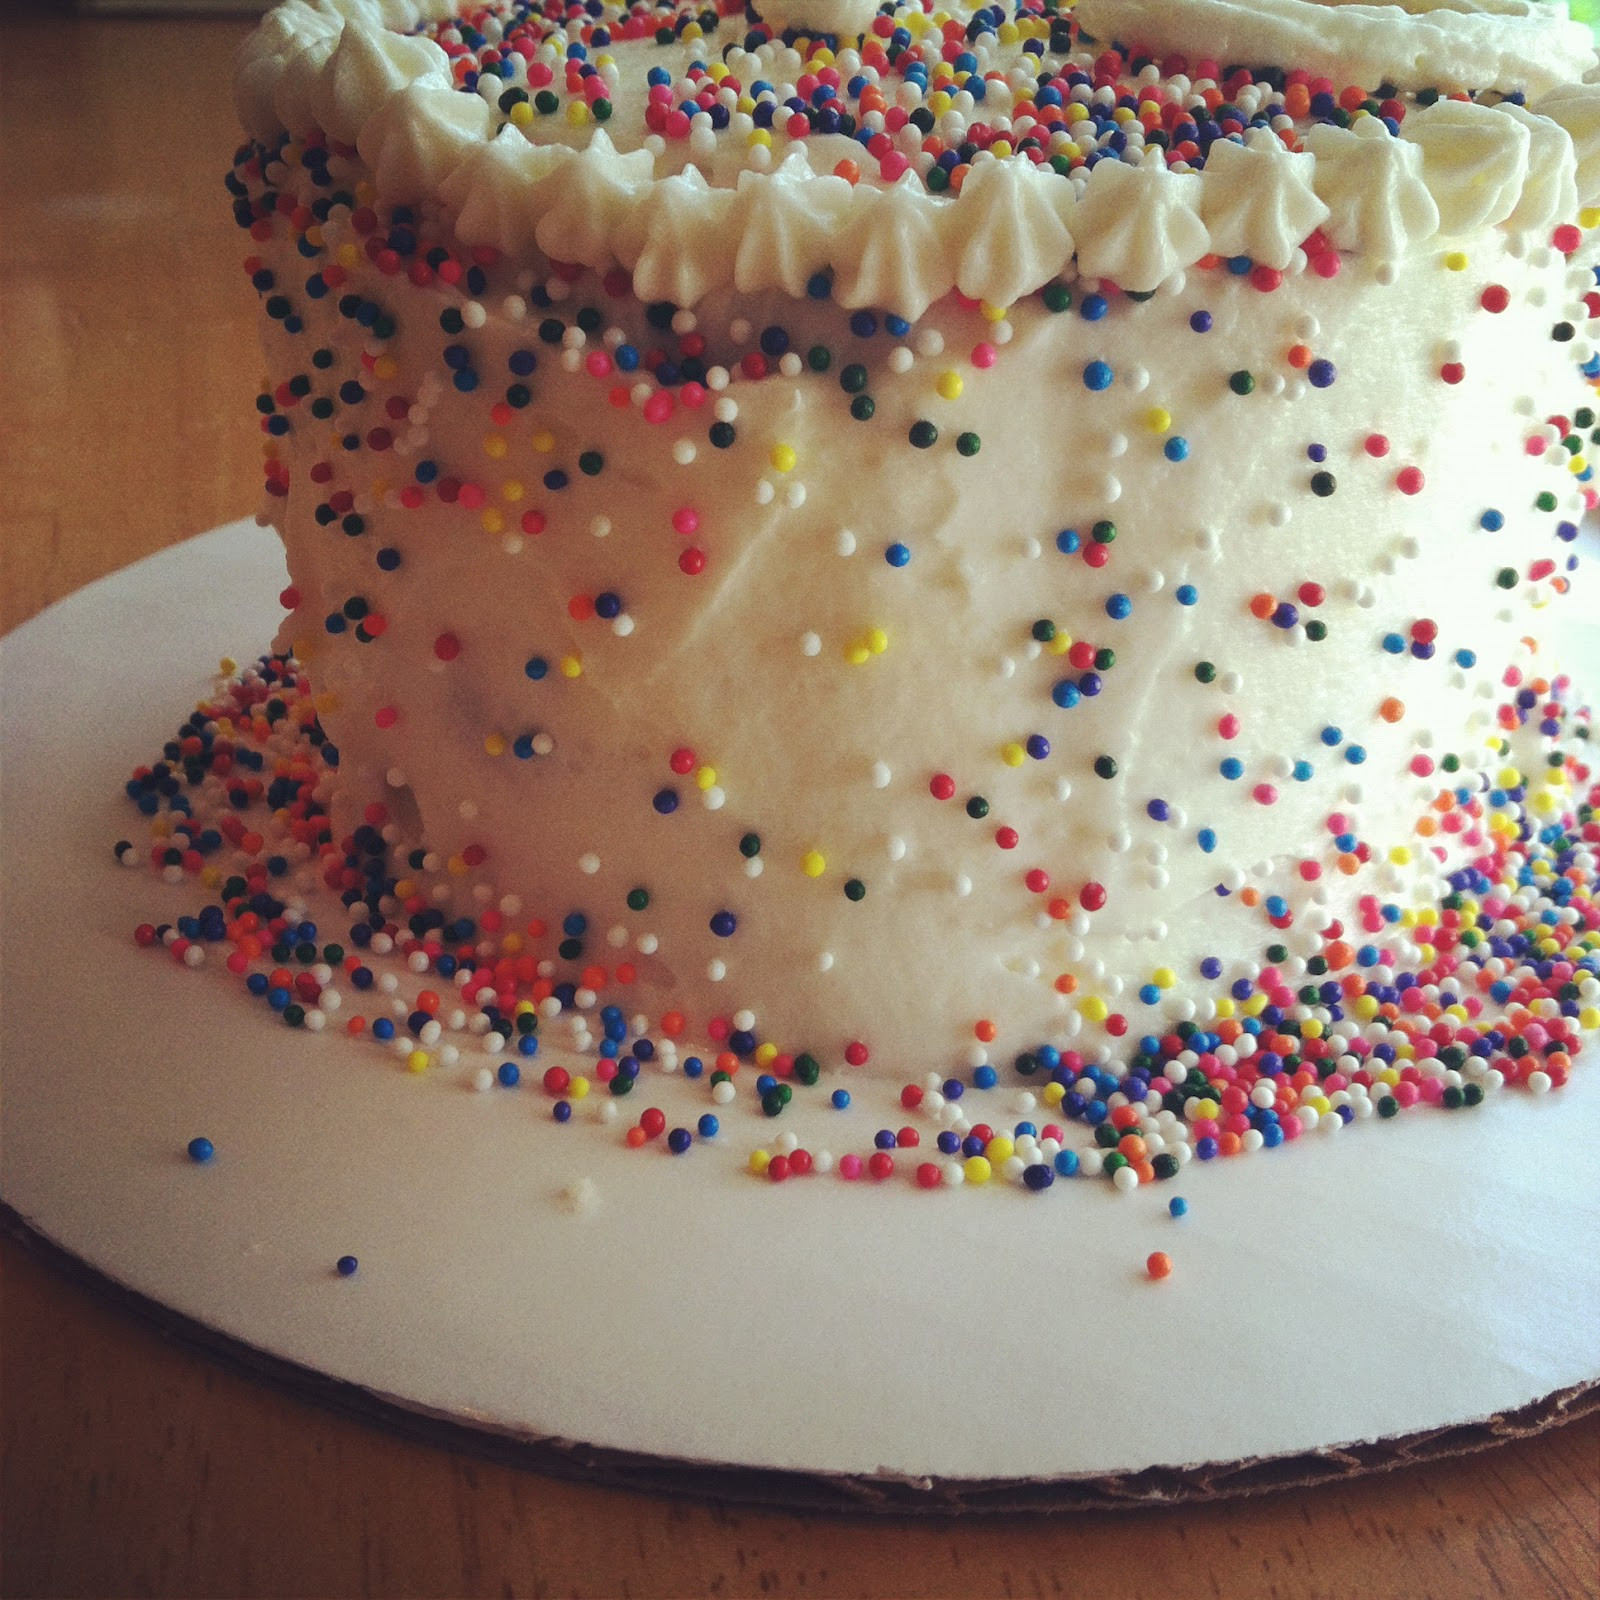 Best ideas about Mini Birthday Cake
. Save or Pin Boston Sweetie Mini Cake Small Batch Baking Now.